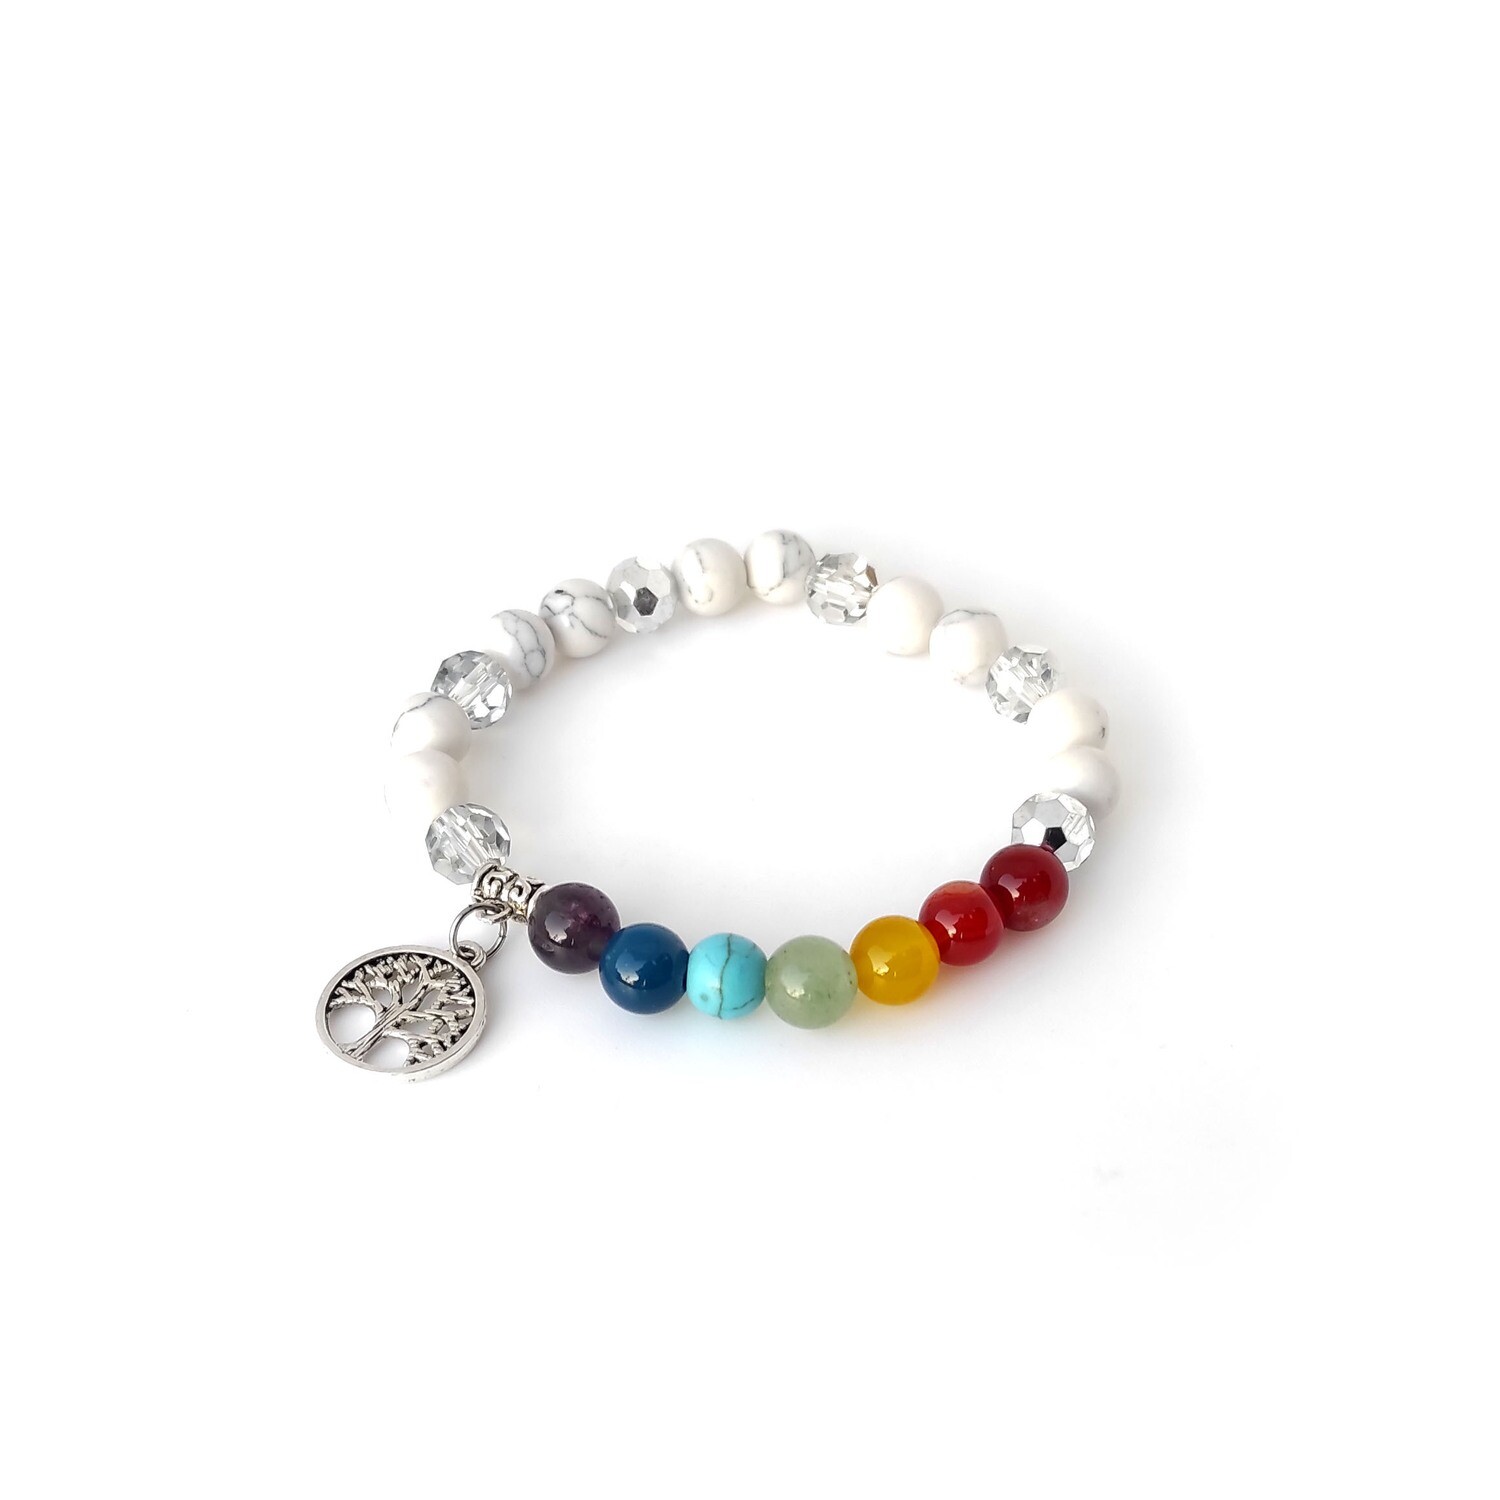 Howlite gemstone with Chakra beads & Tree of Life bracelet